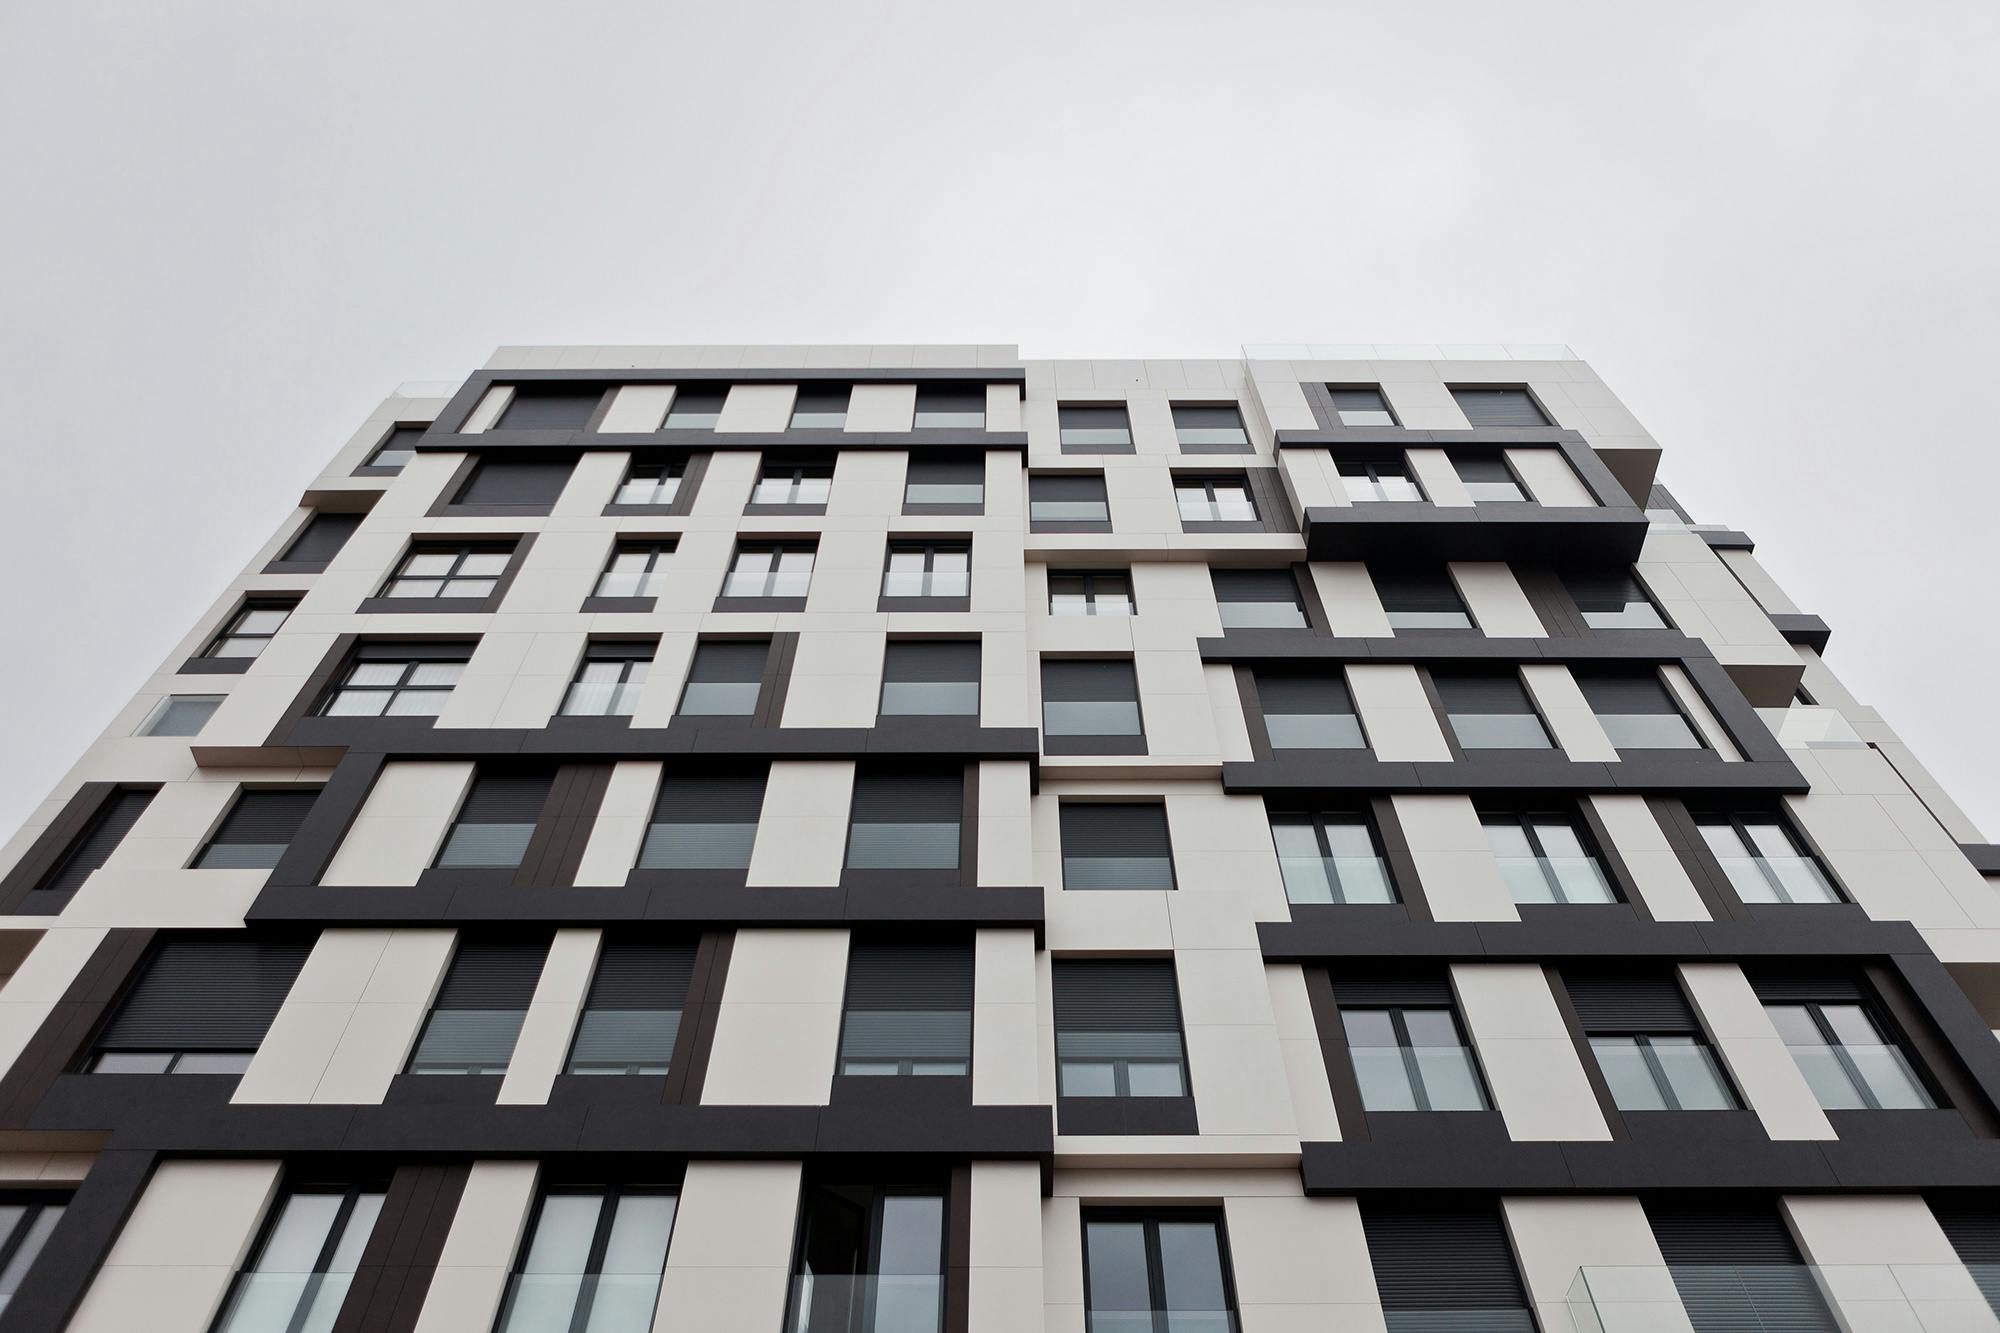 Numéro d'image 32 de la section actuelle de {{A state-of-the-art building in Lugo chooses Dekton to clad its complex façade}} de Cosentino Canada